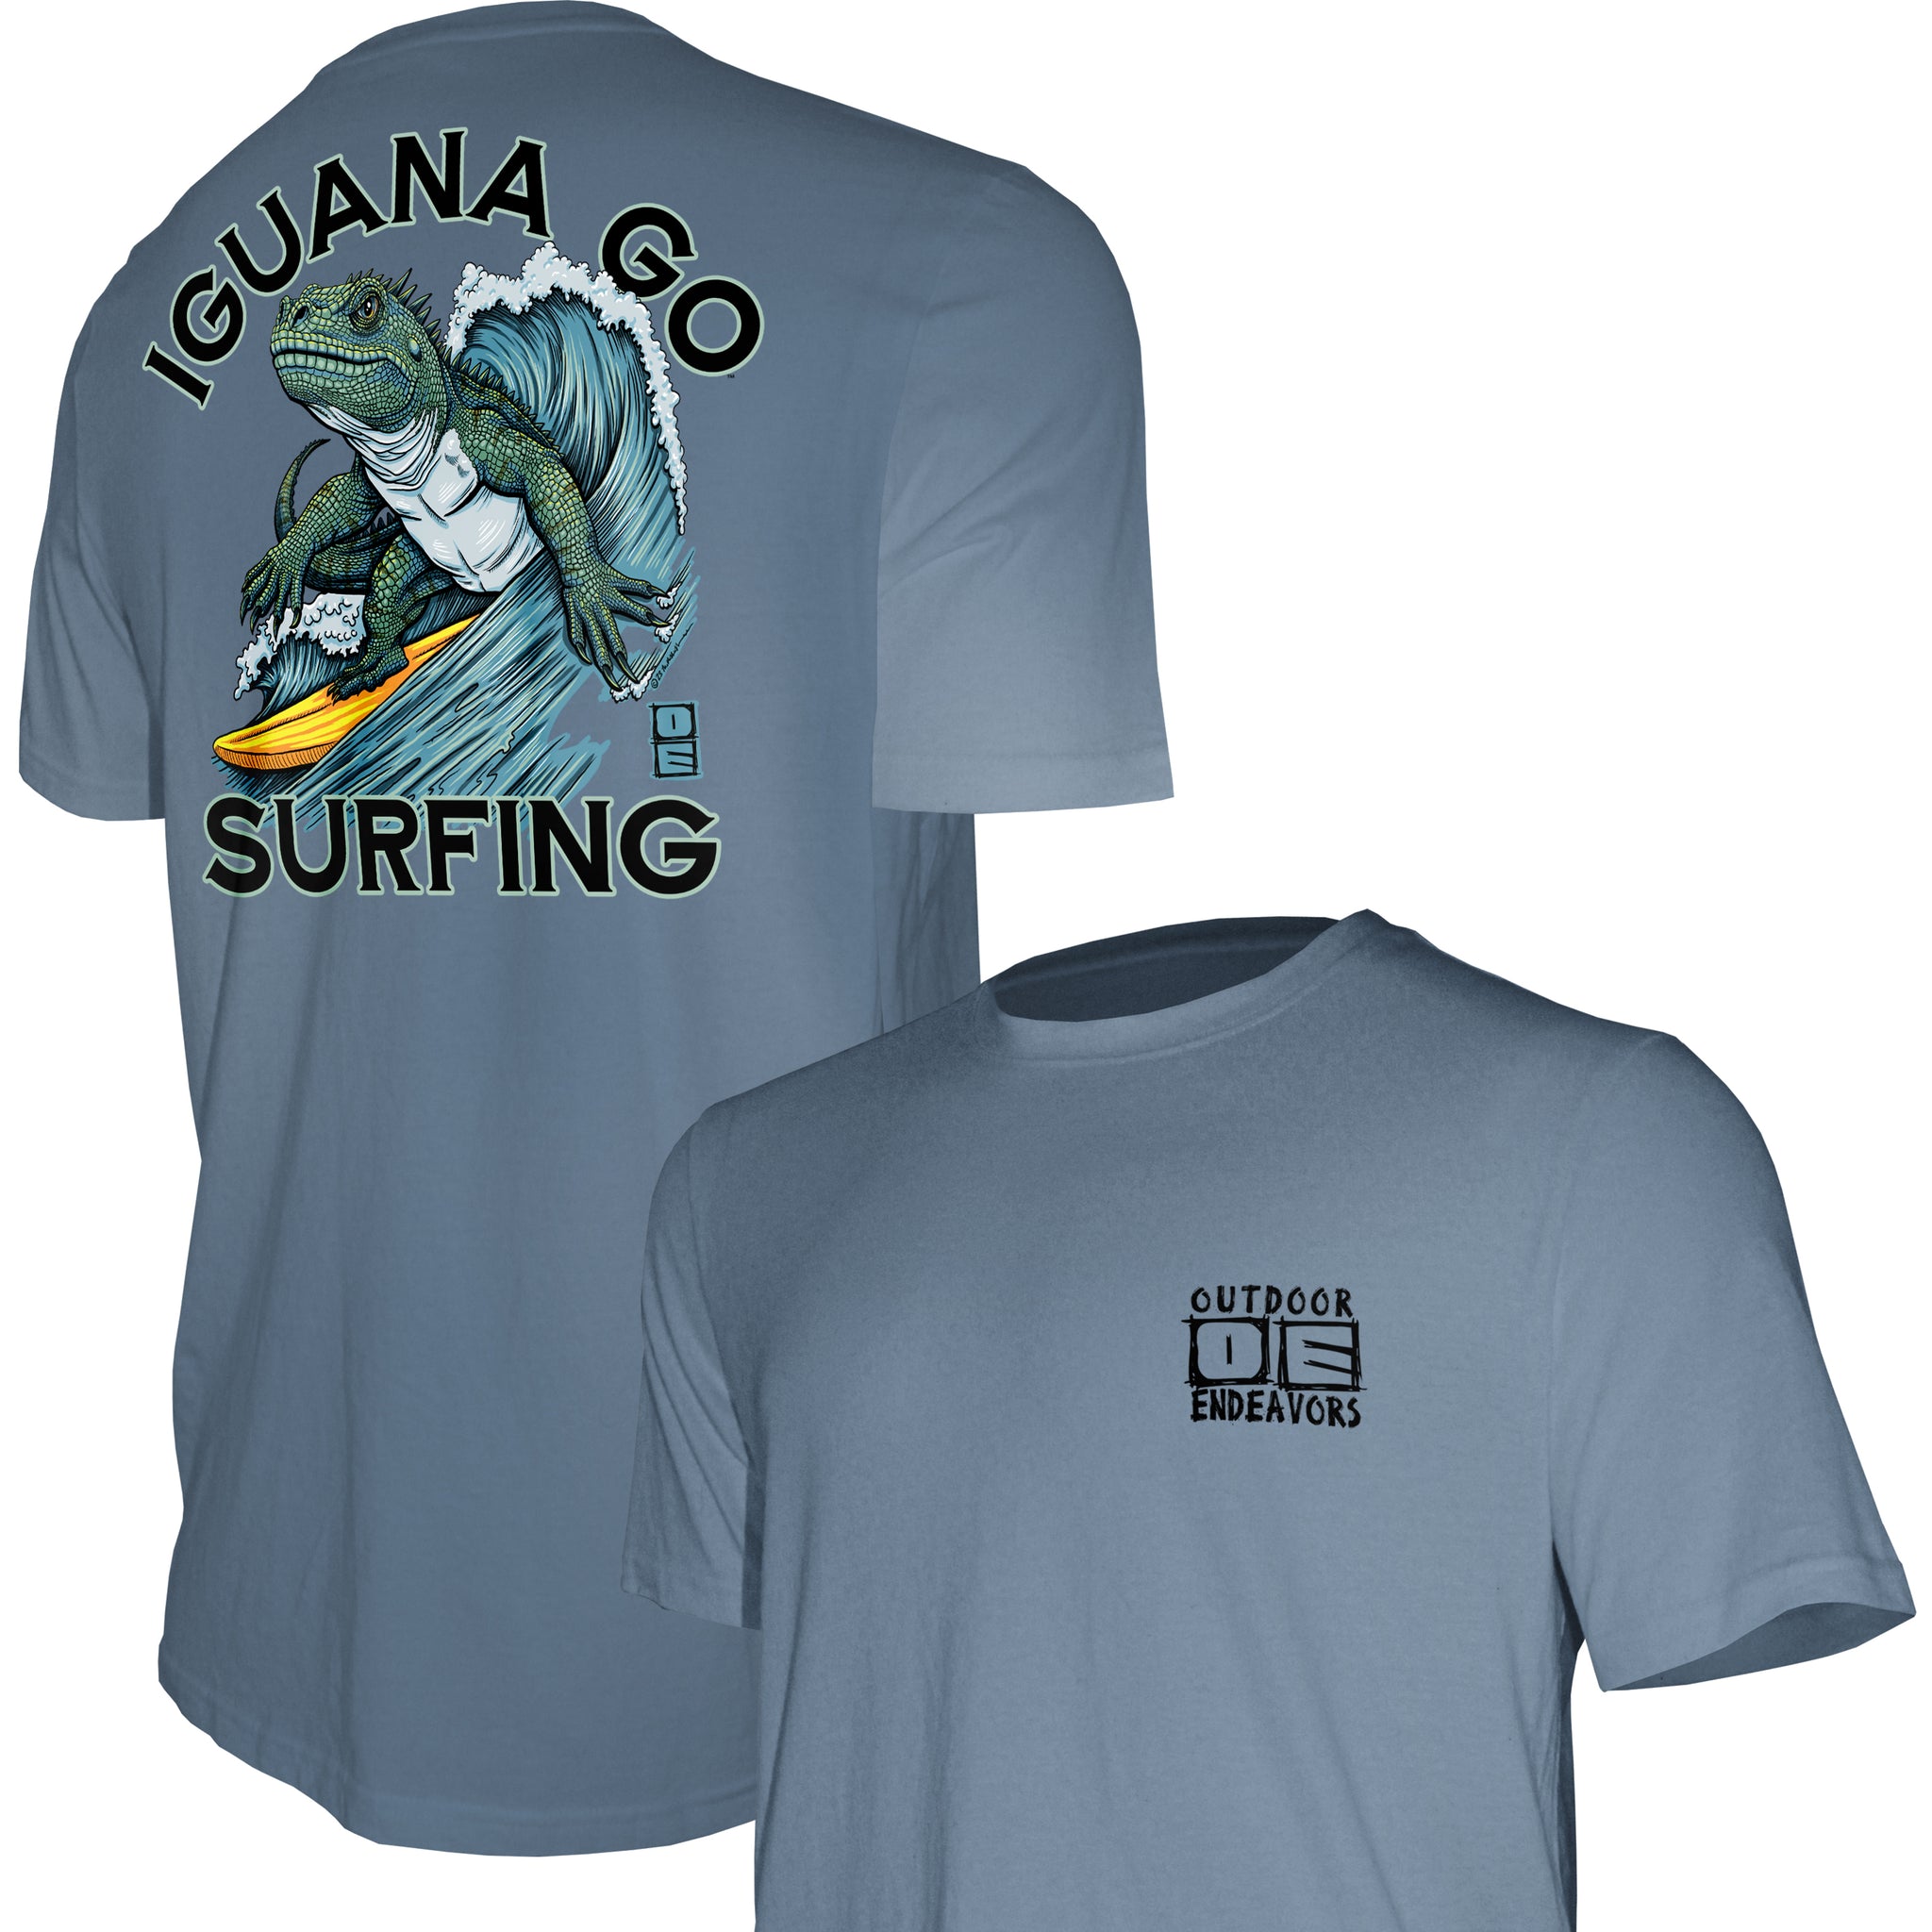 Outdoor Endeavors Attitude- American Made Tee - Iguana Go Surfing